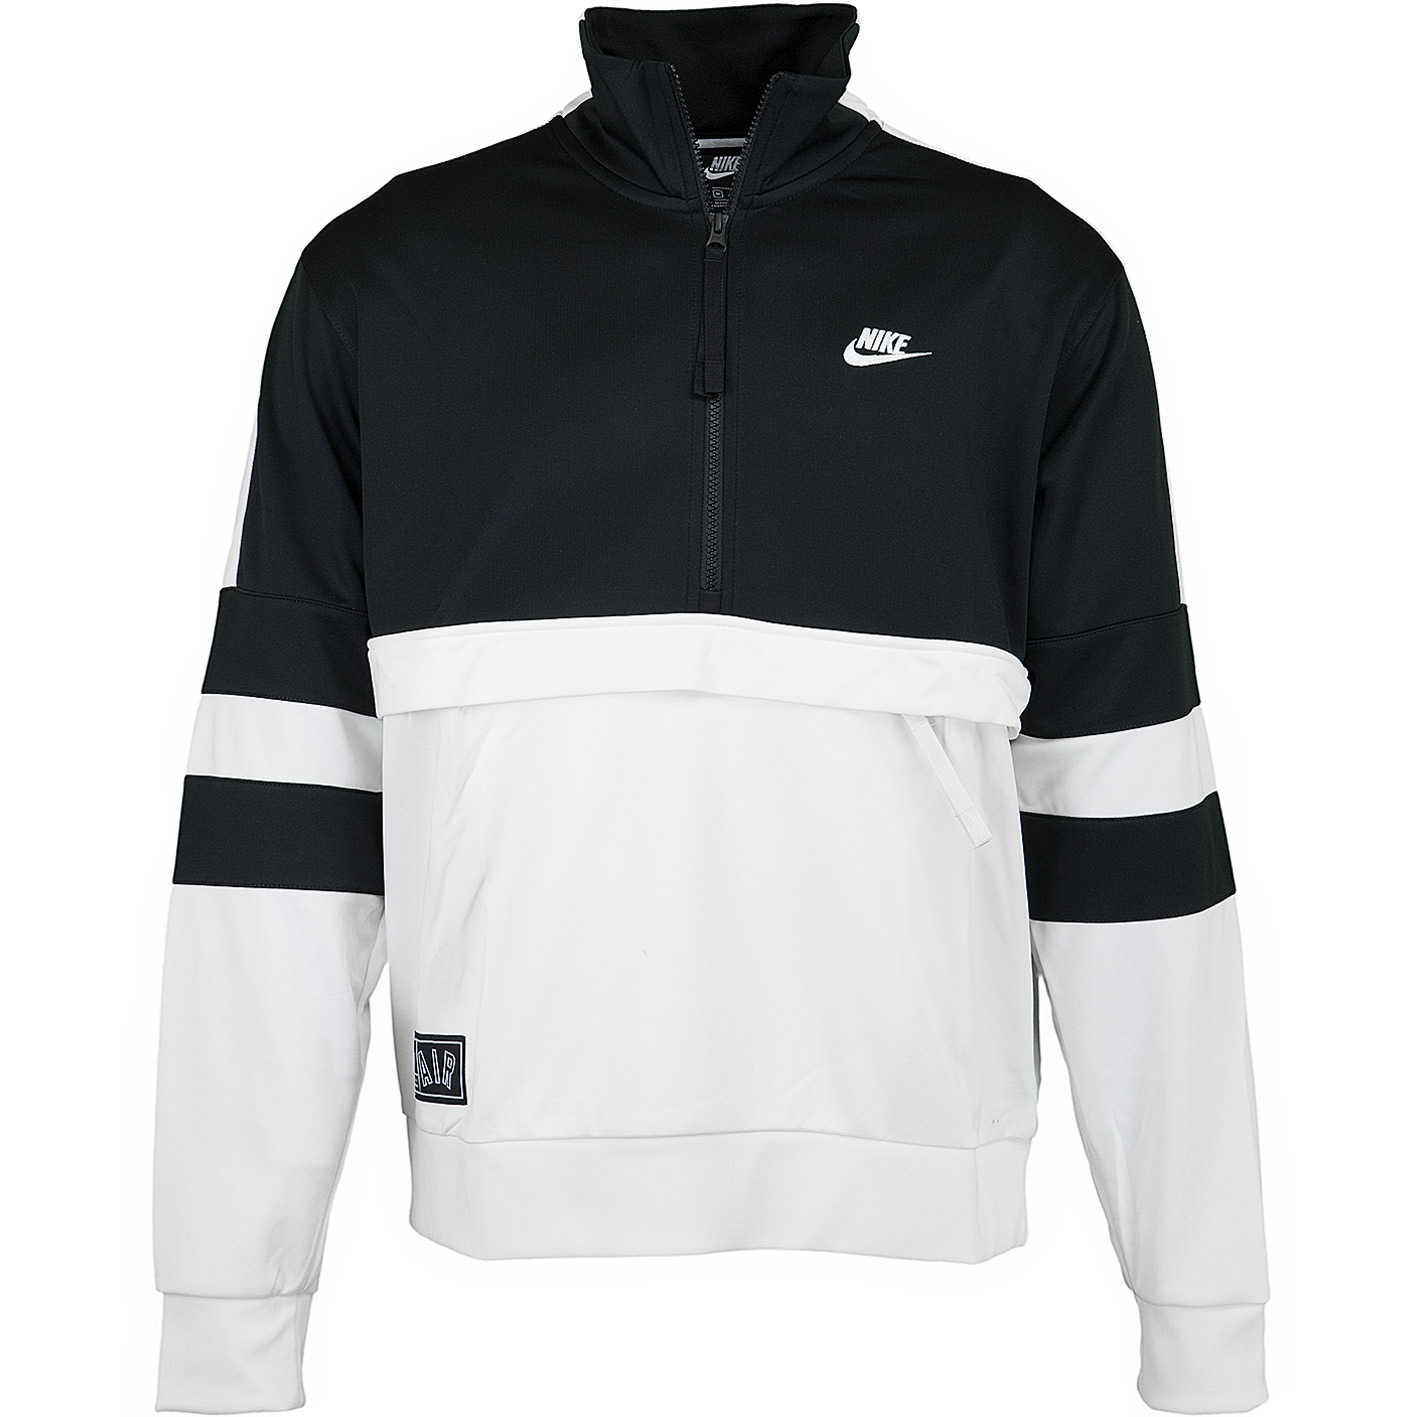 ☆ Nike Trainingsjacke Air Half Zip schwarz/weiß - hier bestellen!